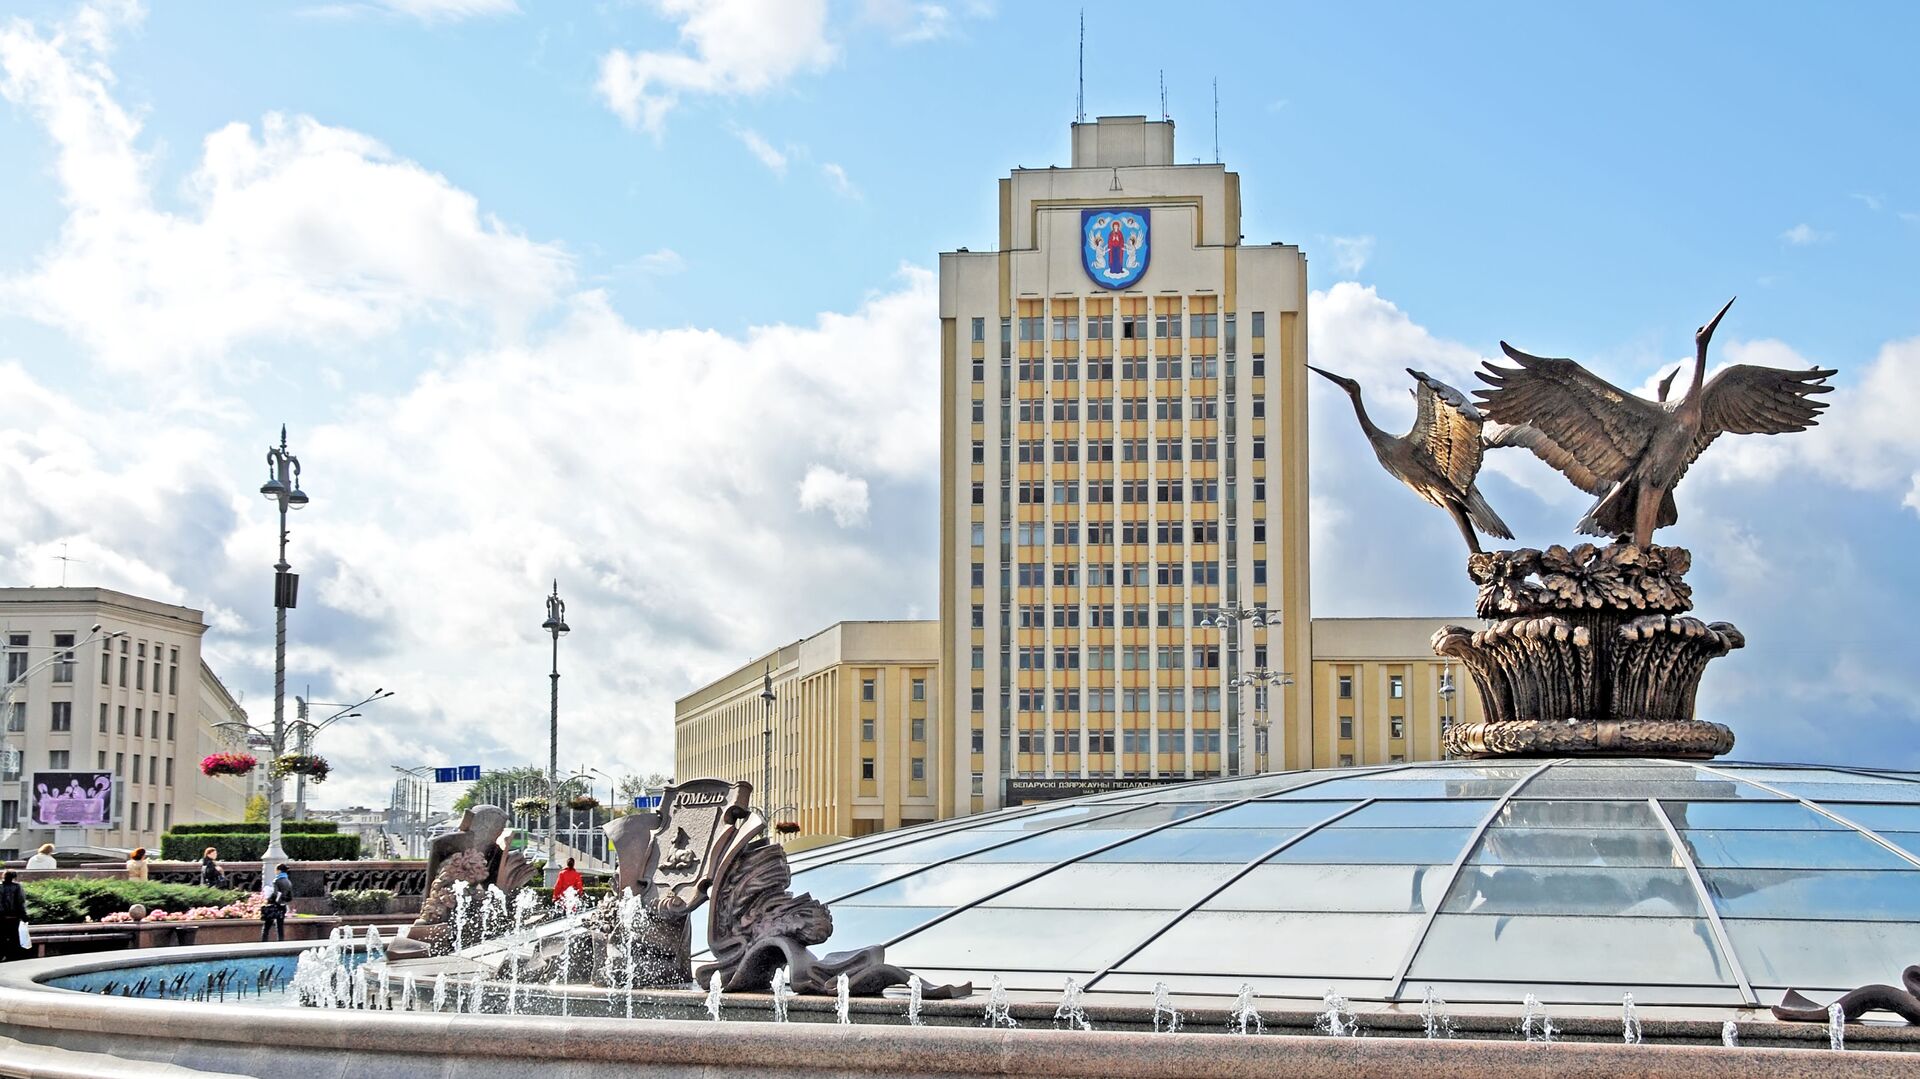 Площадь Независимости в Минске, Белоруссия - Sputnik Србија, 1920, 03.06.2021